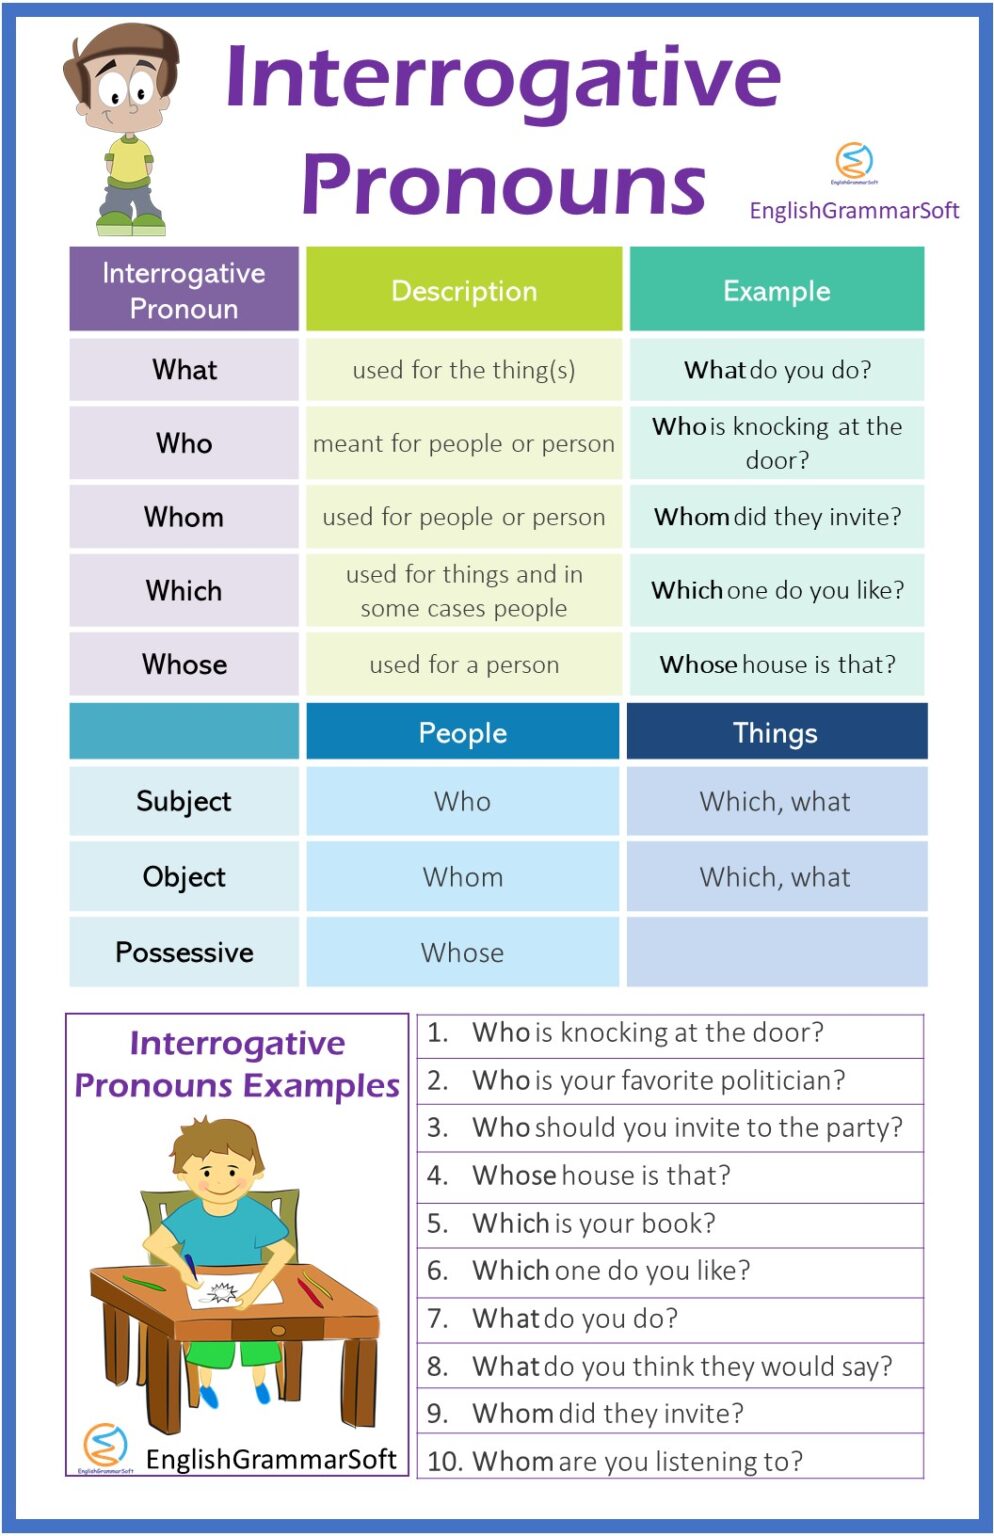 Interrogative Pronoun Examples